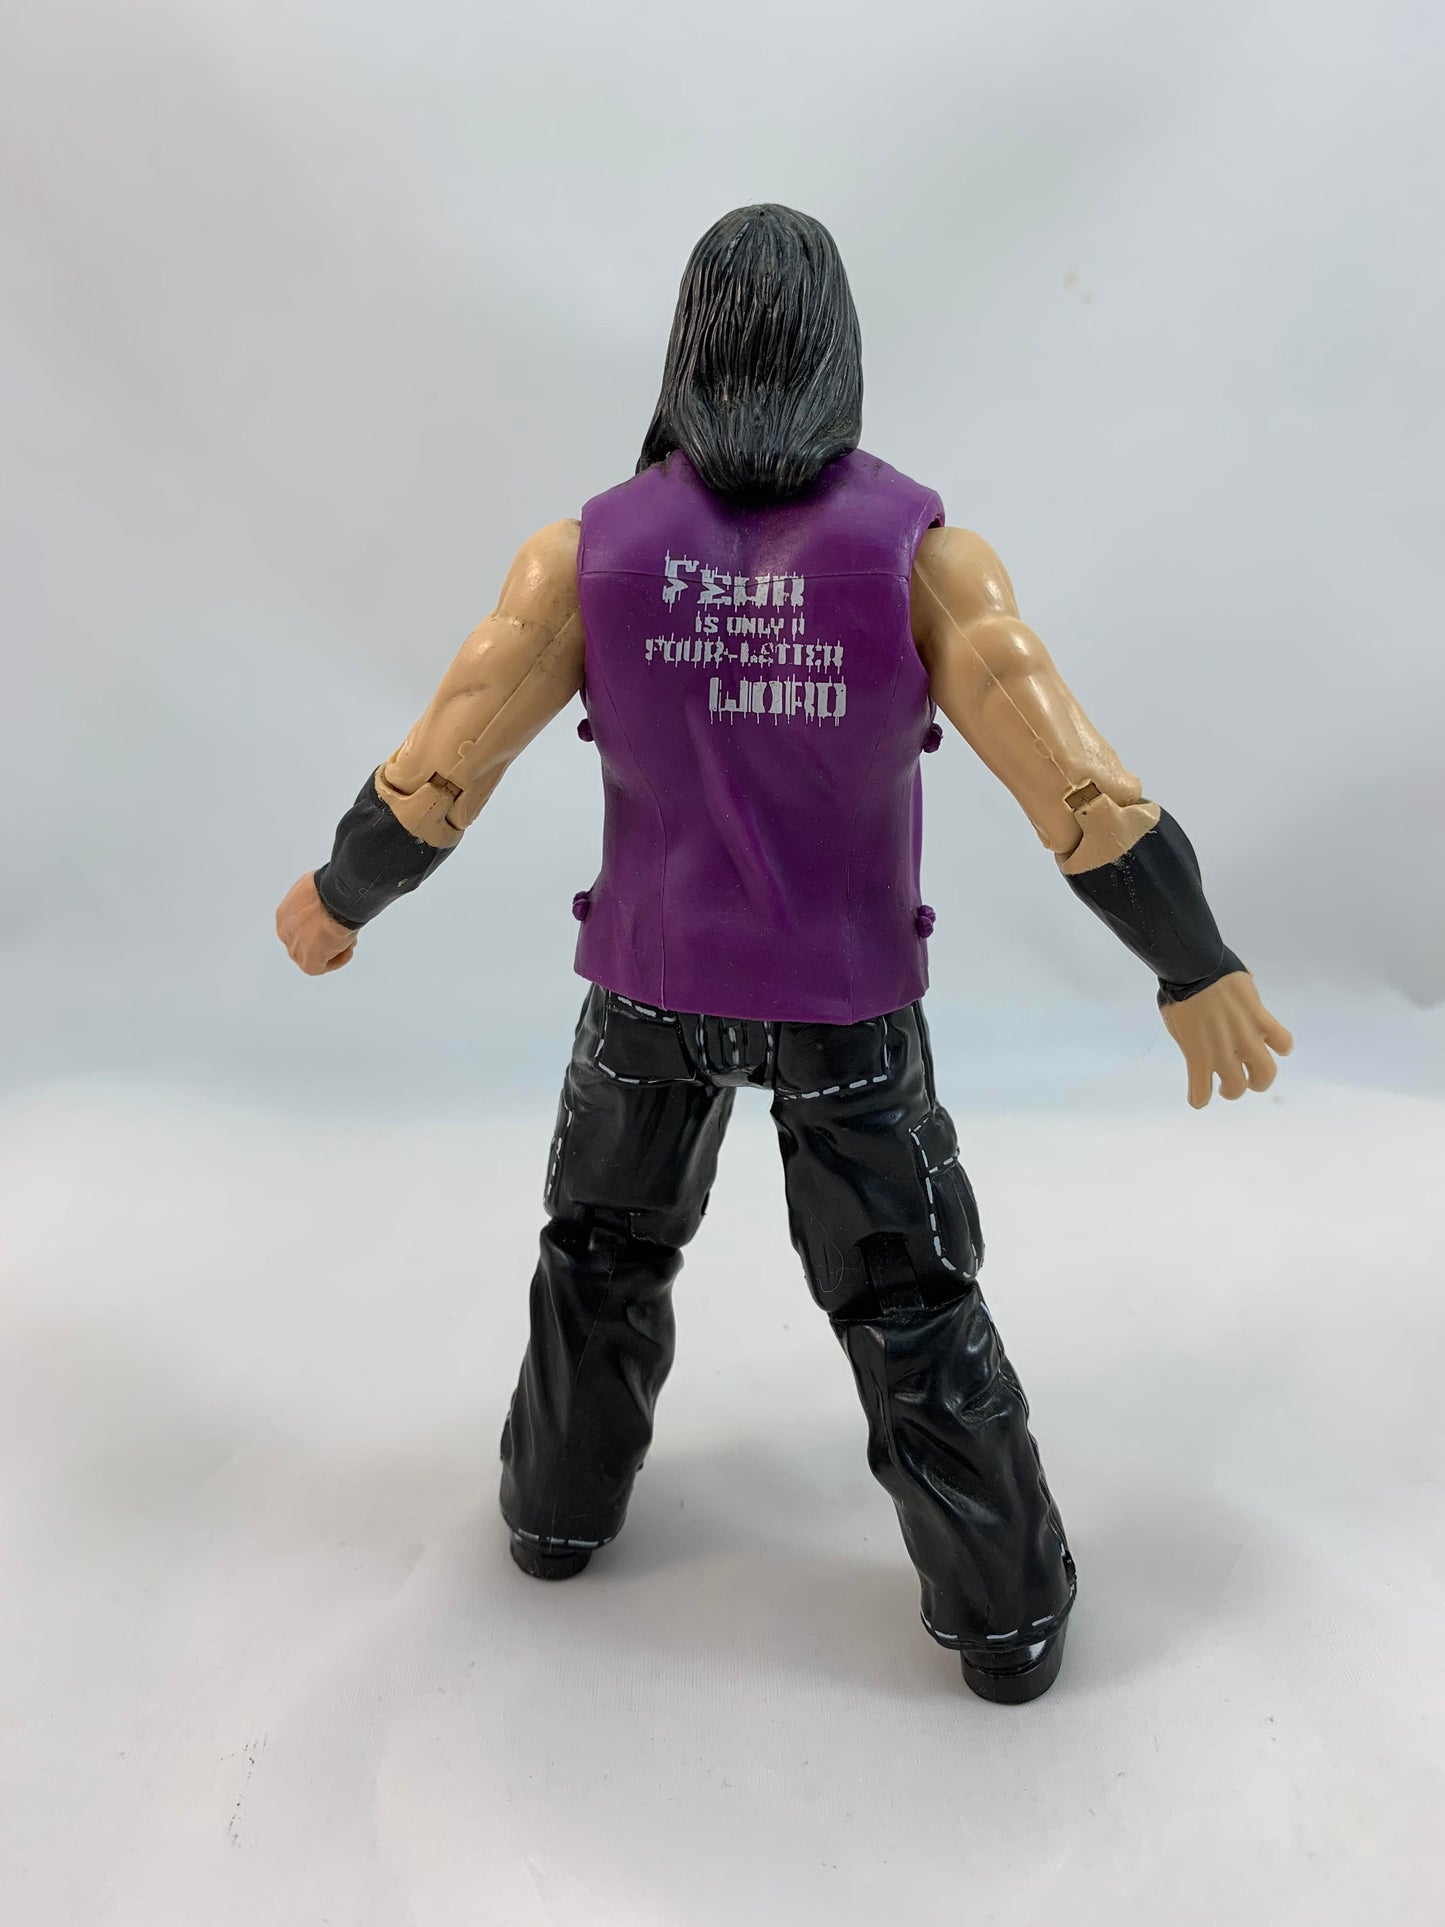 1999 Jakks Pacific Matt Hardy Hardy Titan Tron Live - Loose Action Figure